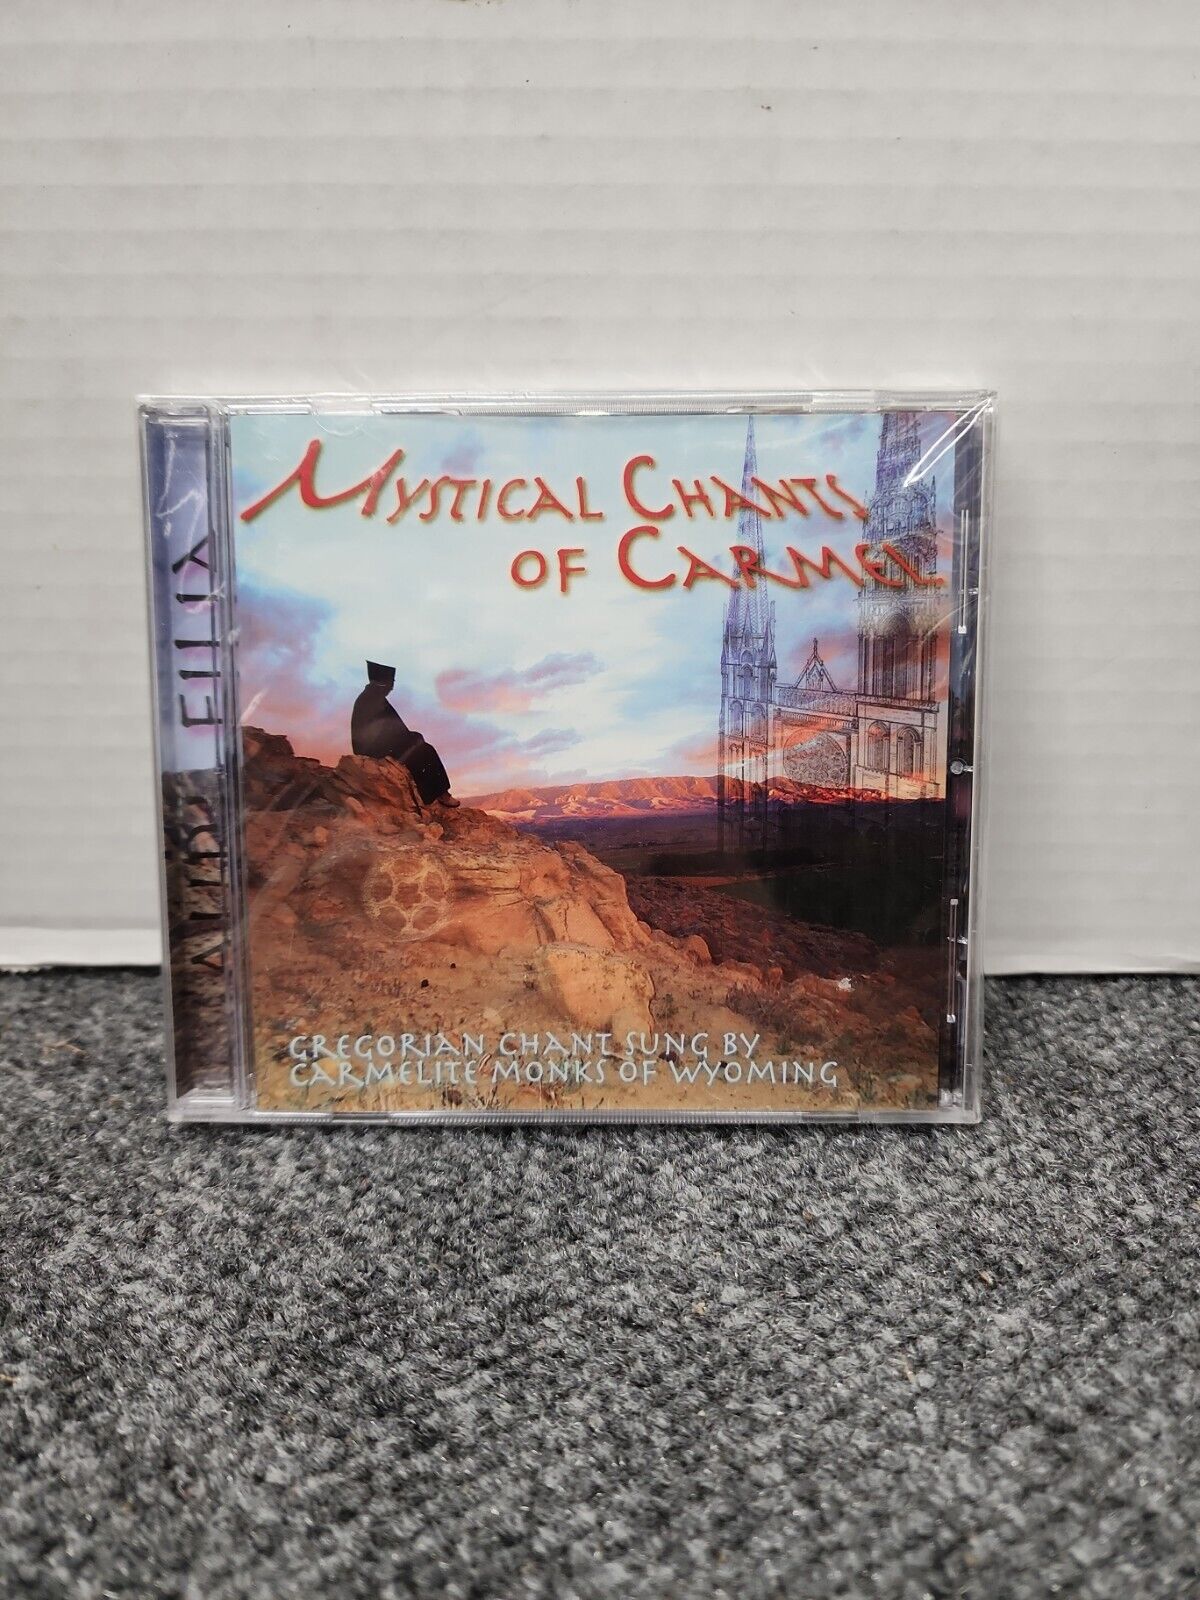 Mystical Chants of Carmel: Audi Filia by Carmelite Monks of Wyoming CD